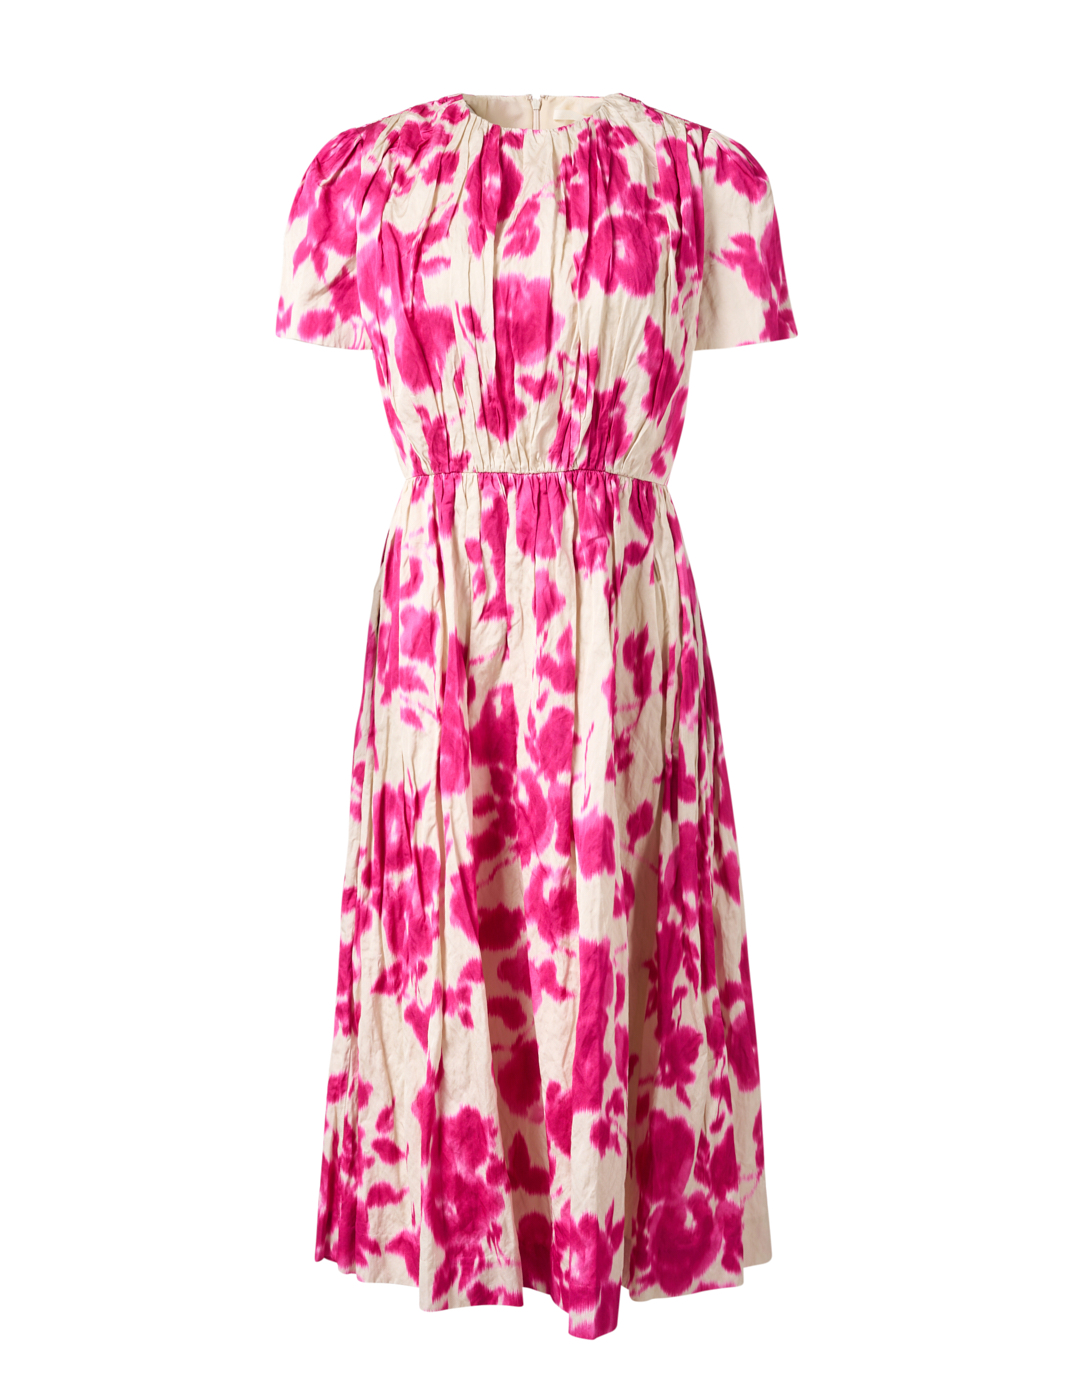 Pink and Cream Print Dress | Jason Wu Collection